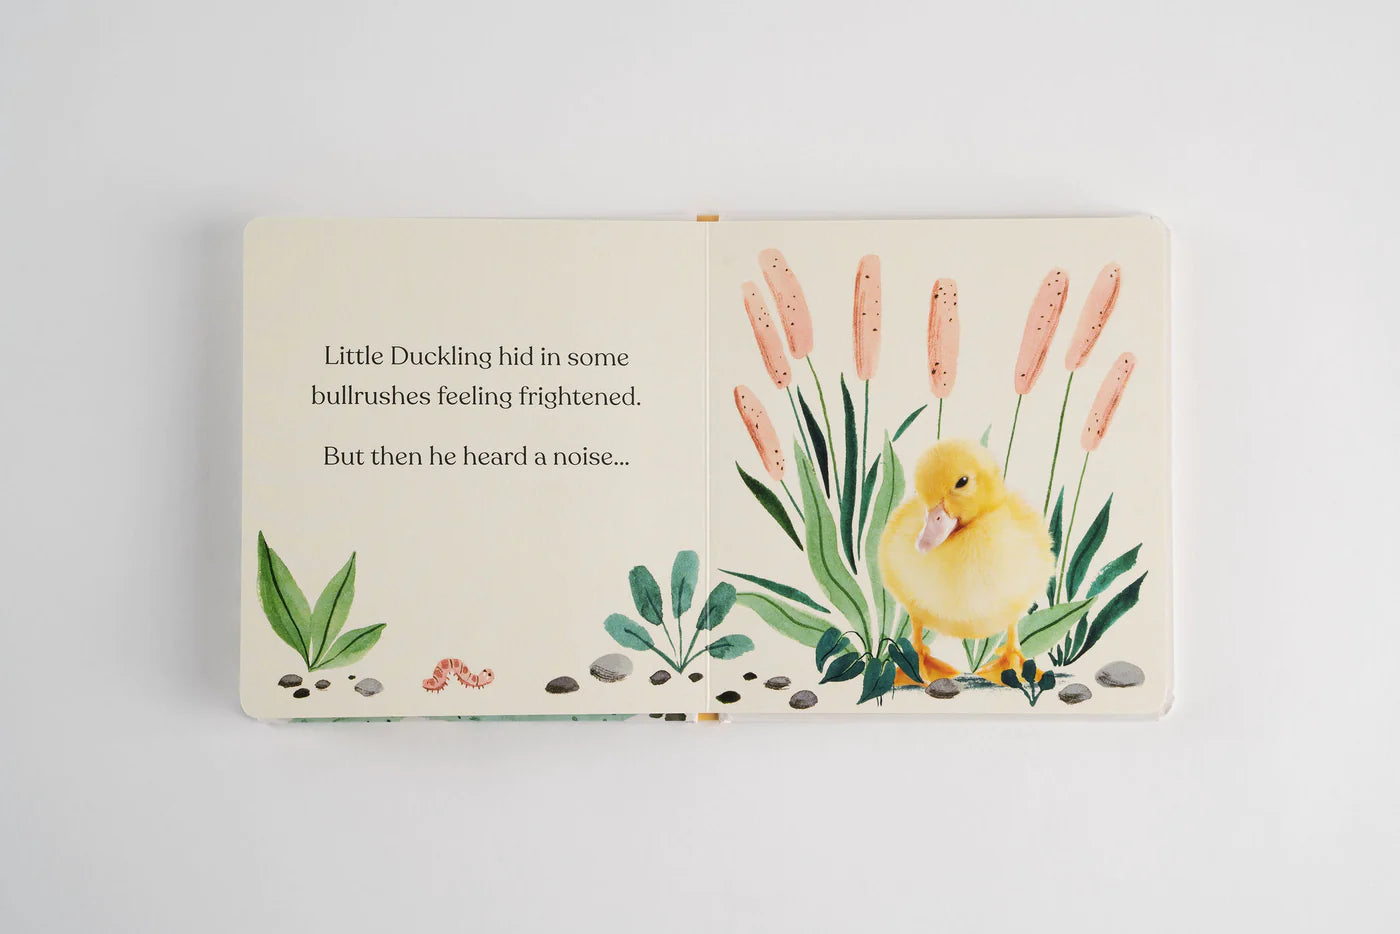 Goodnight, Little Duckling - Board Book